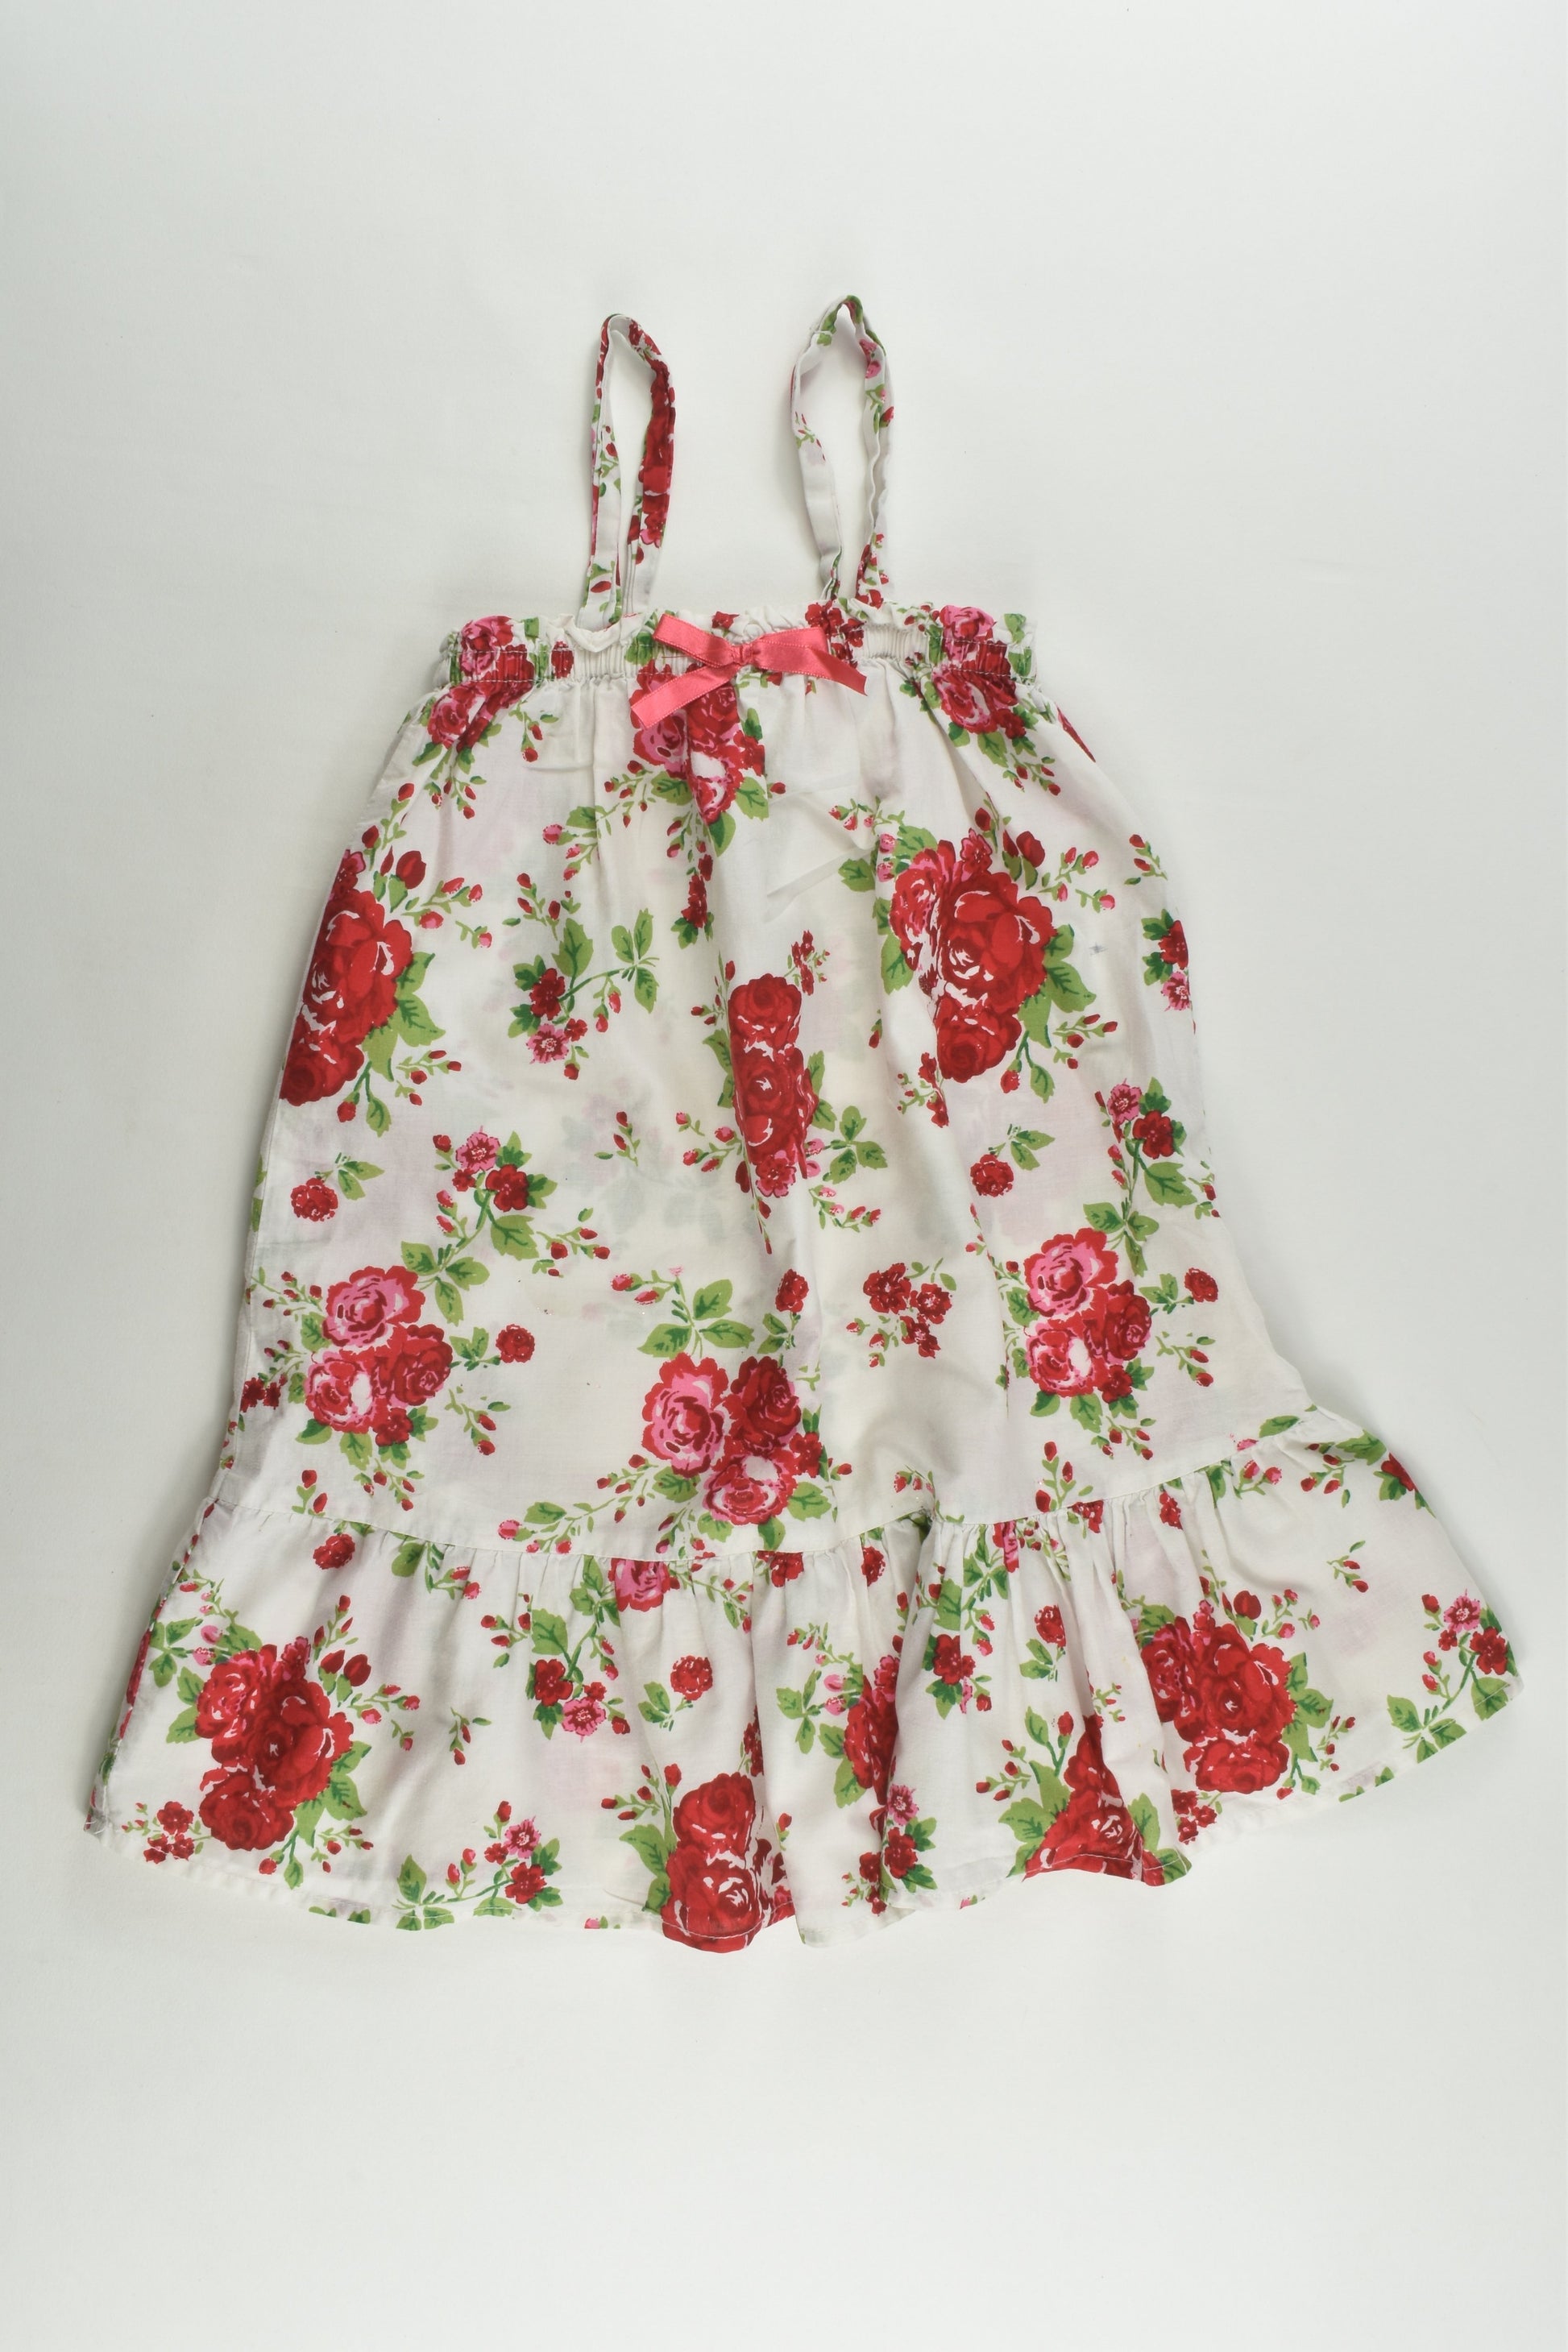 H&M Size 2-3 (98 cm) Roses Dress